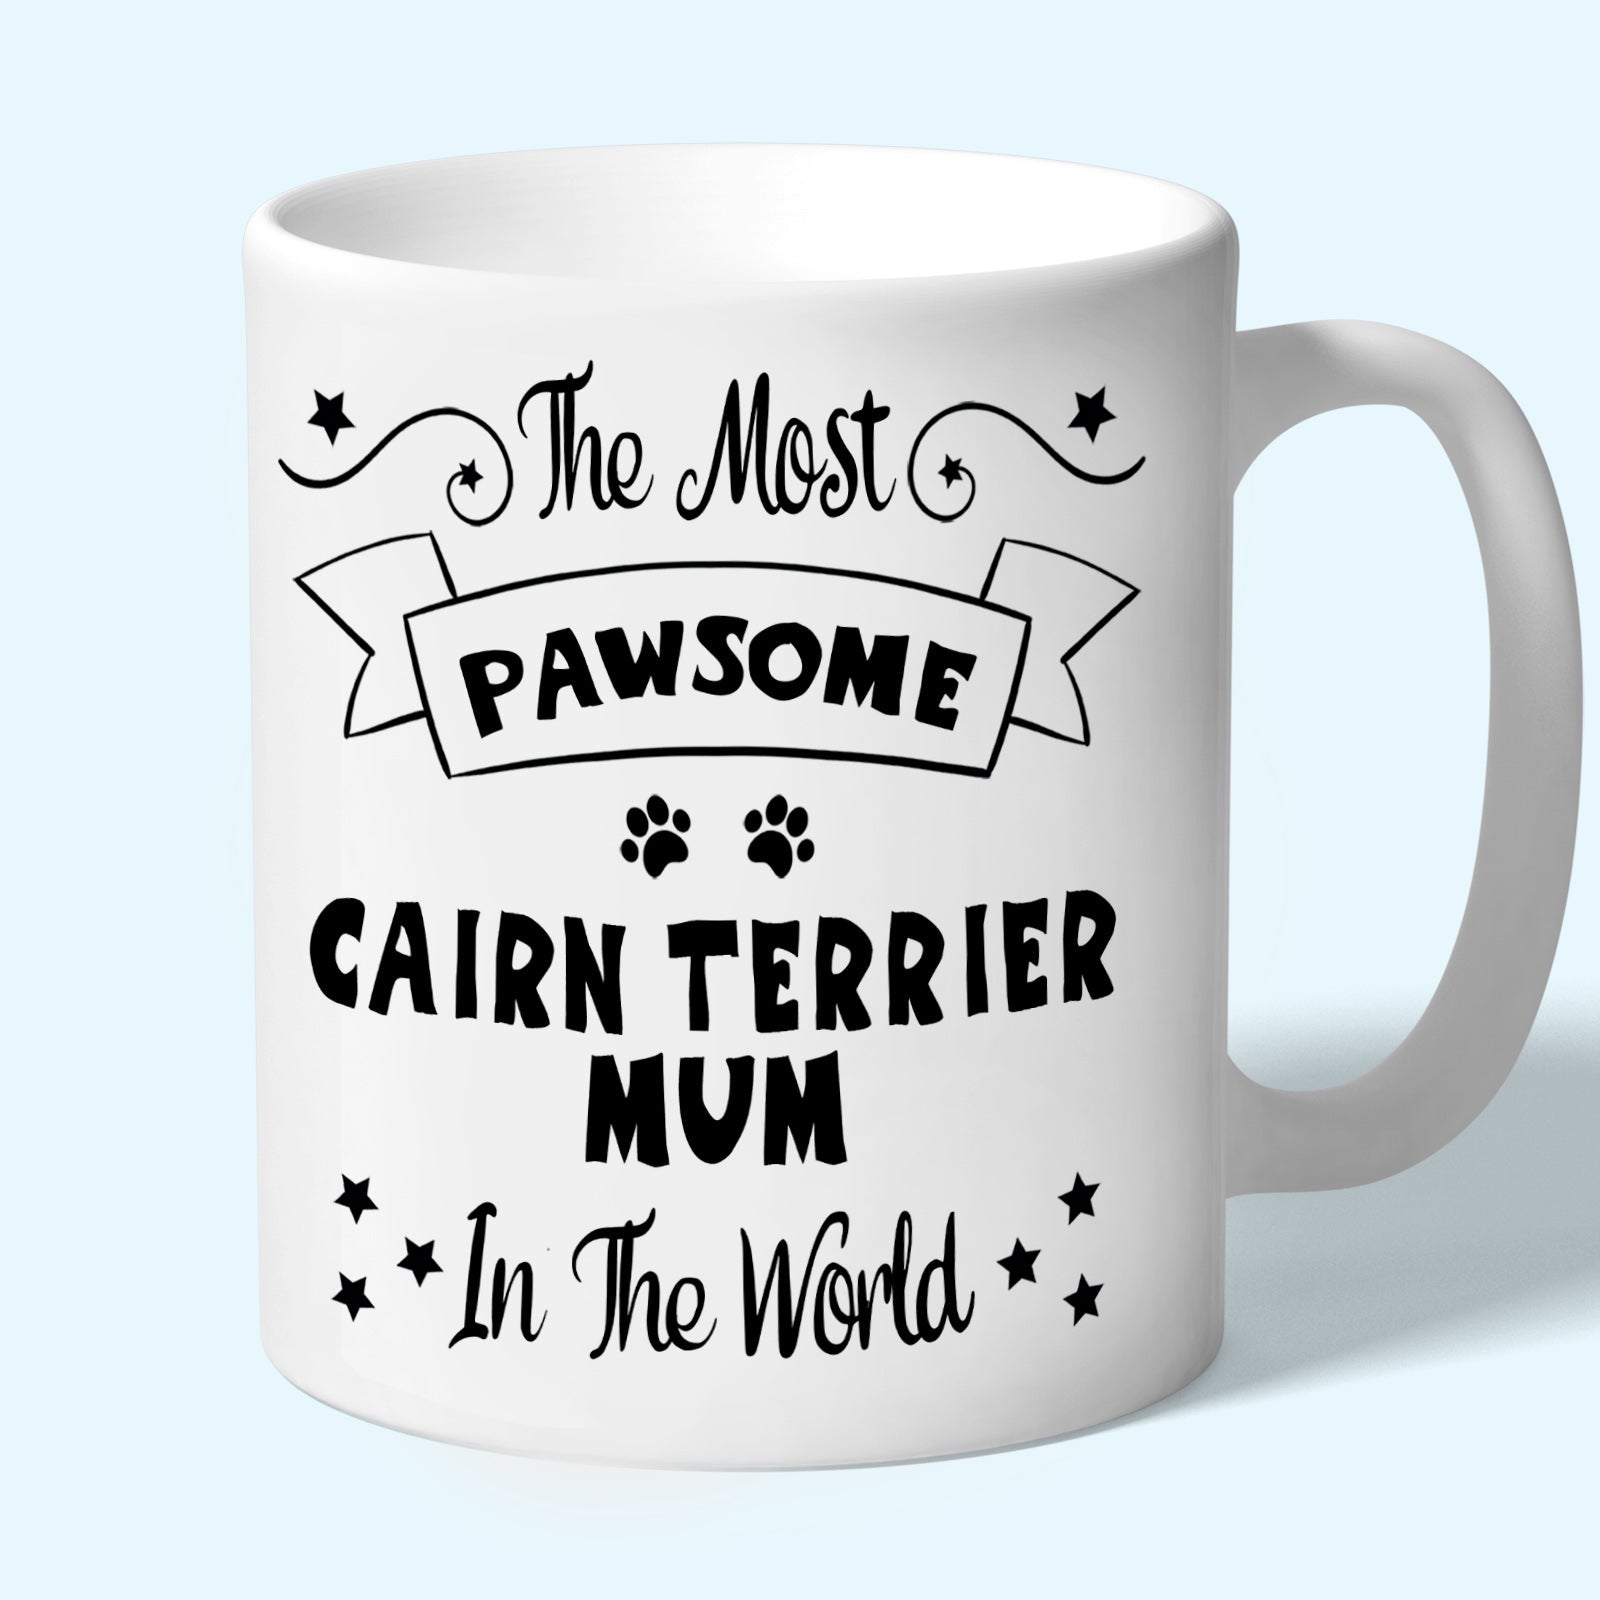 Cairn Terrier Gift Mum Mug